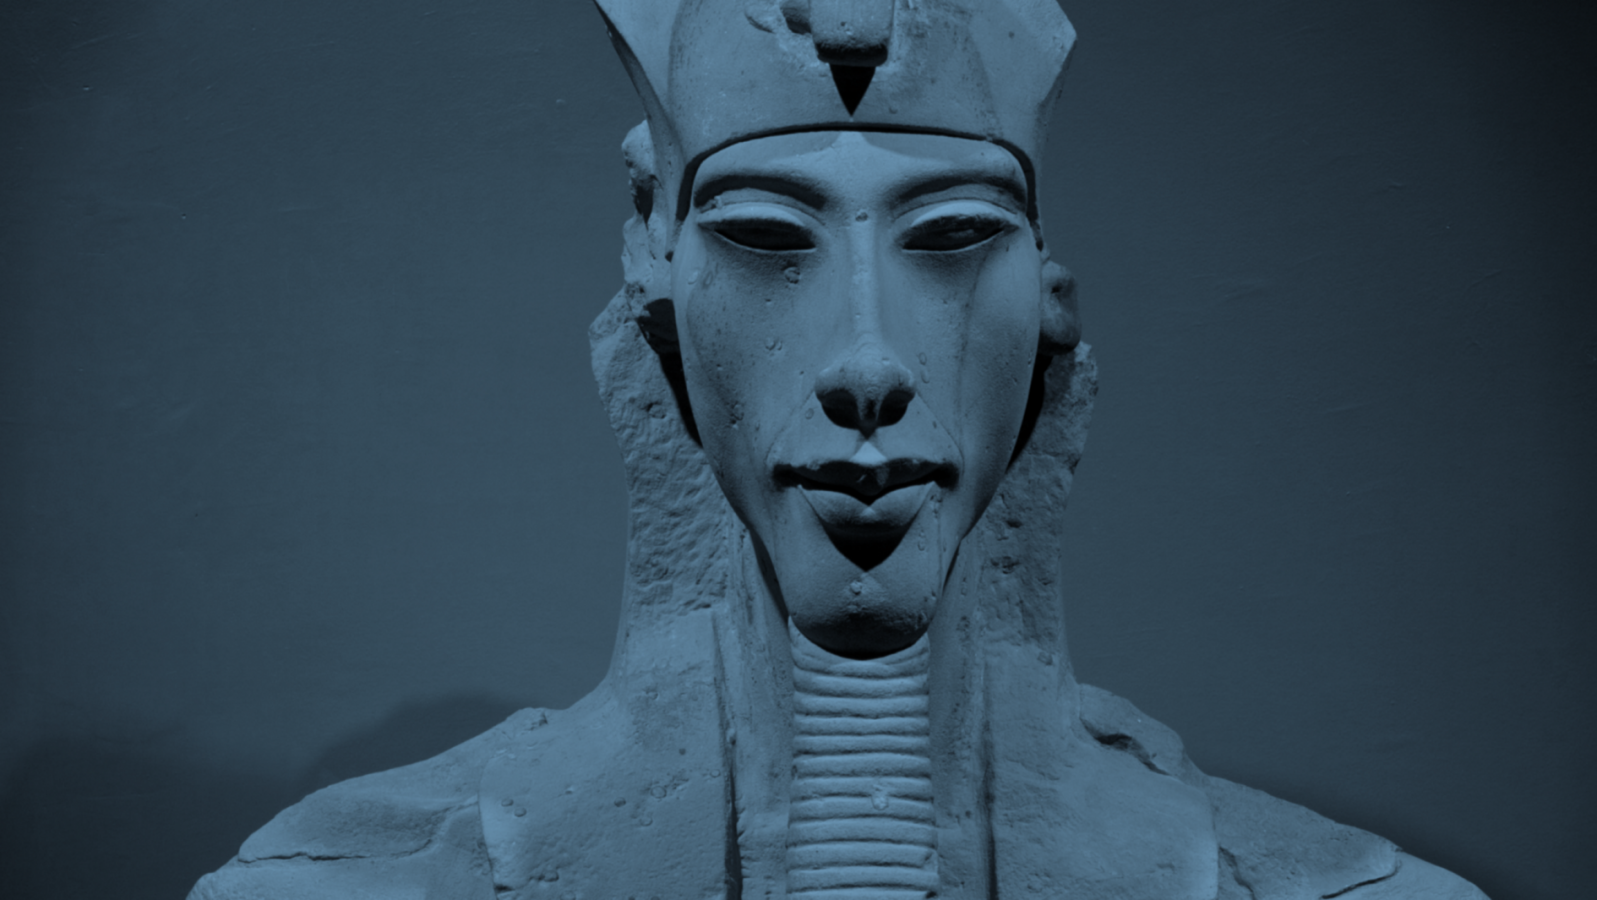 Pharaoh Akhenaten